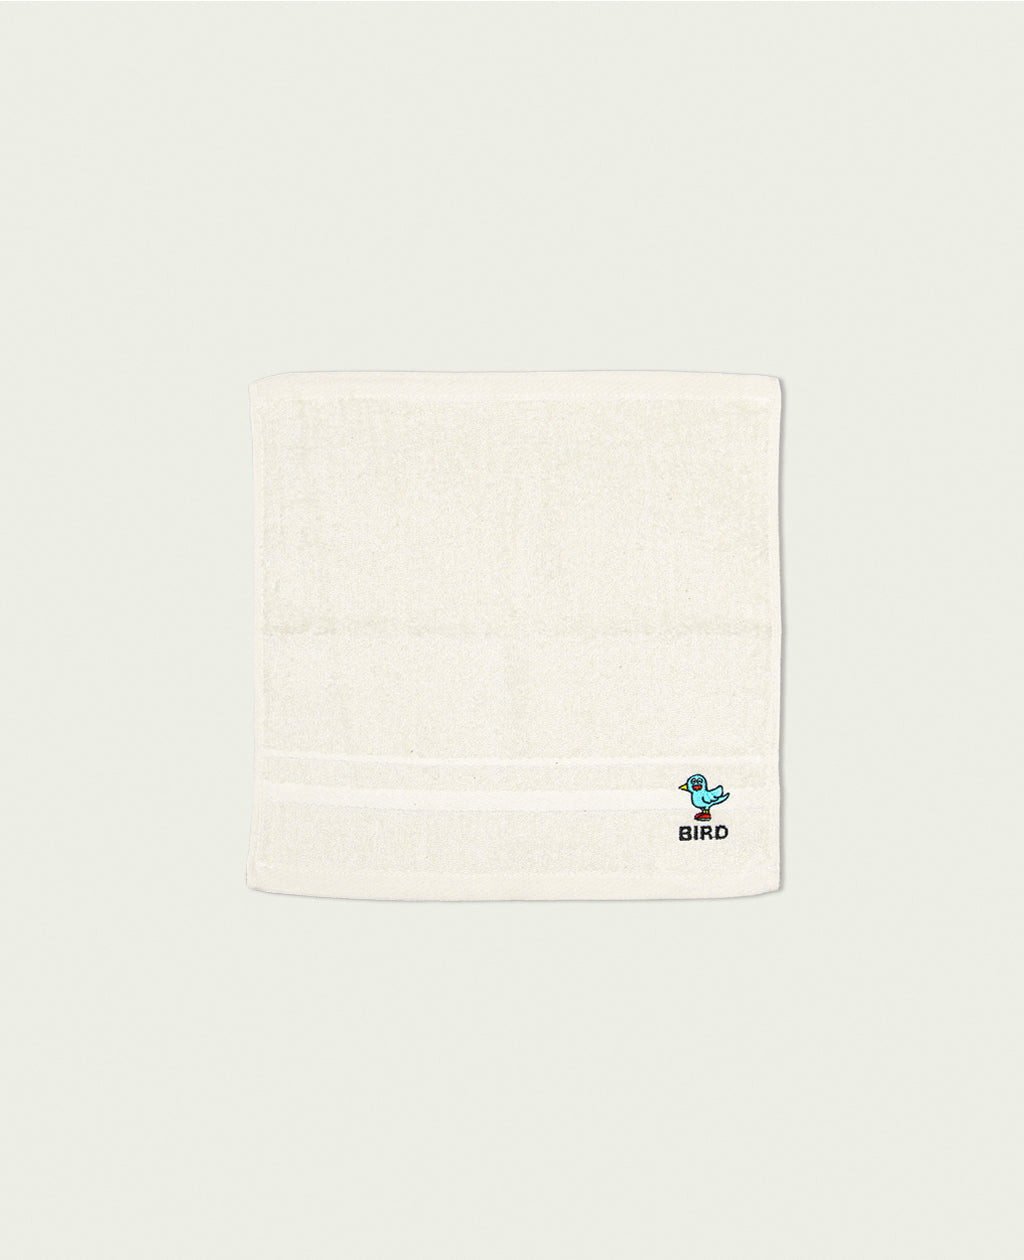 【negosocks】Pile Handkerchief | BIRD